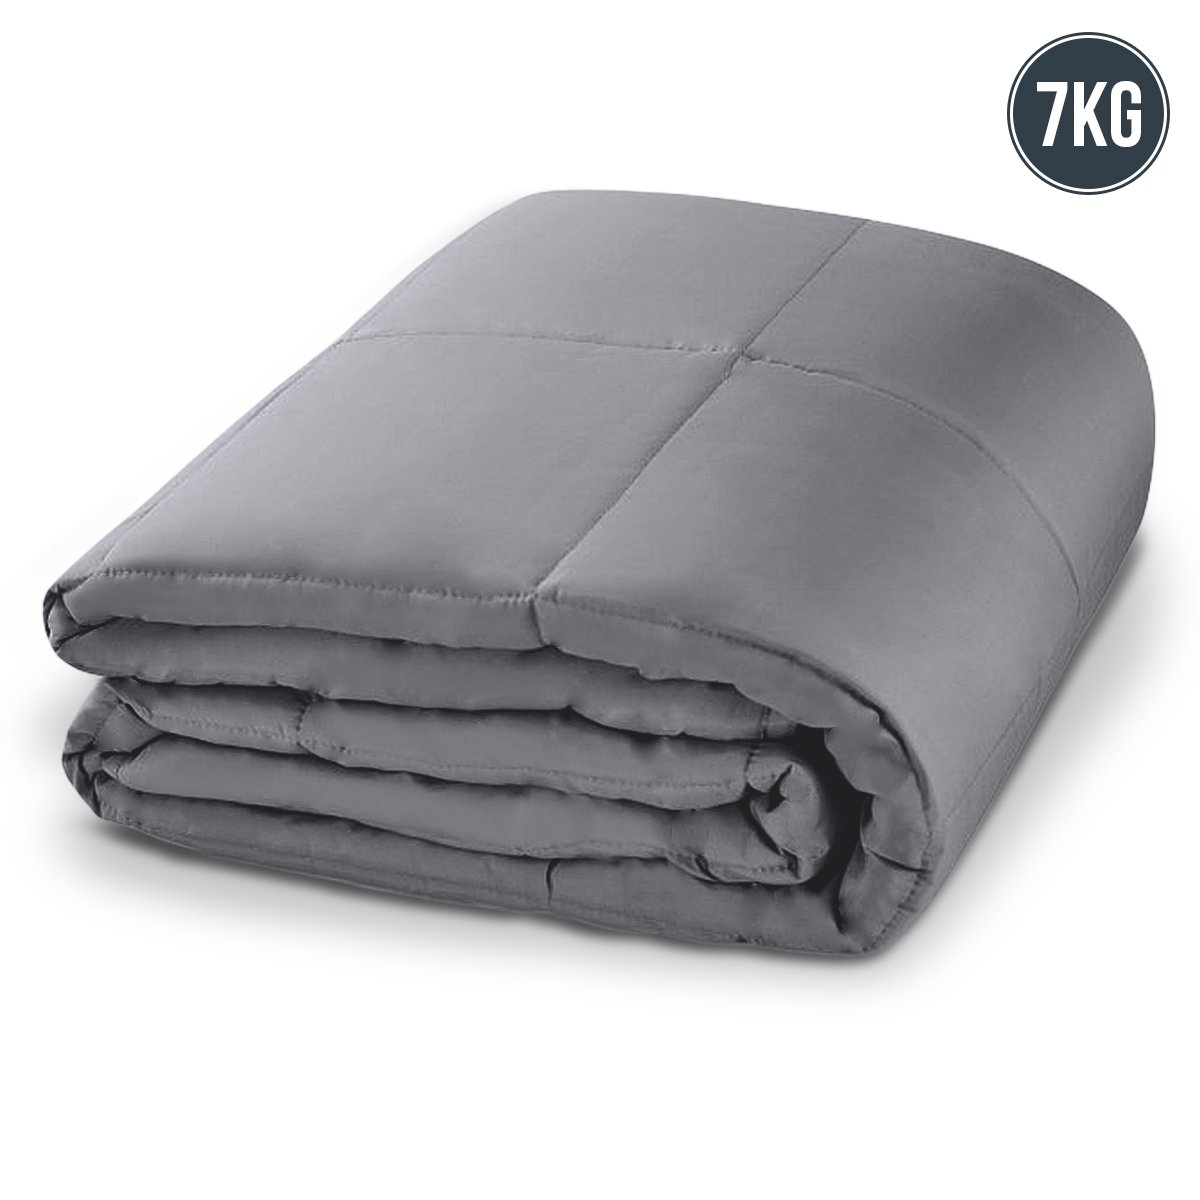 Laura Hill Weighted Blanket Heavy Quilt Doona 7Kg - Grey 1